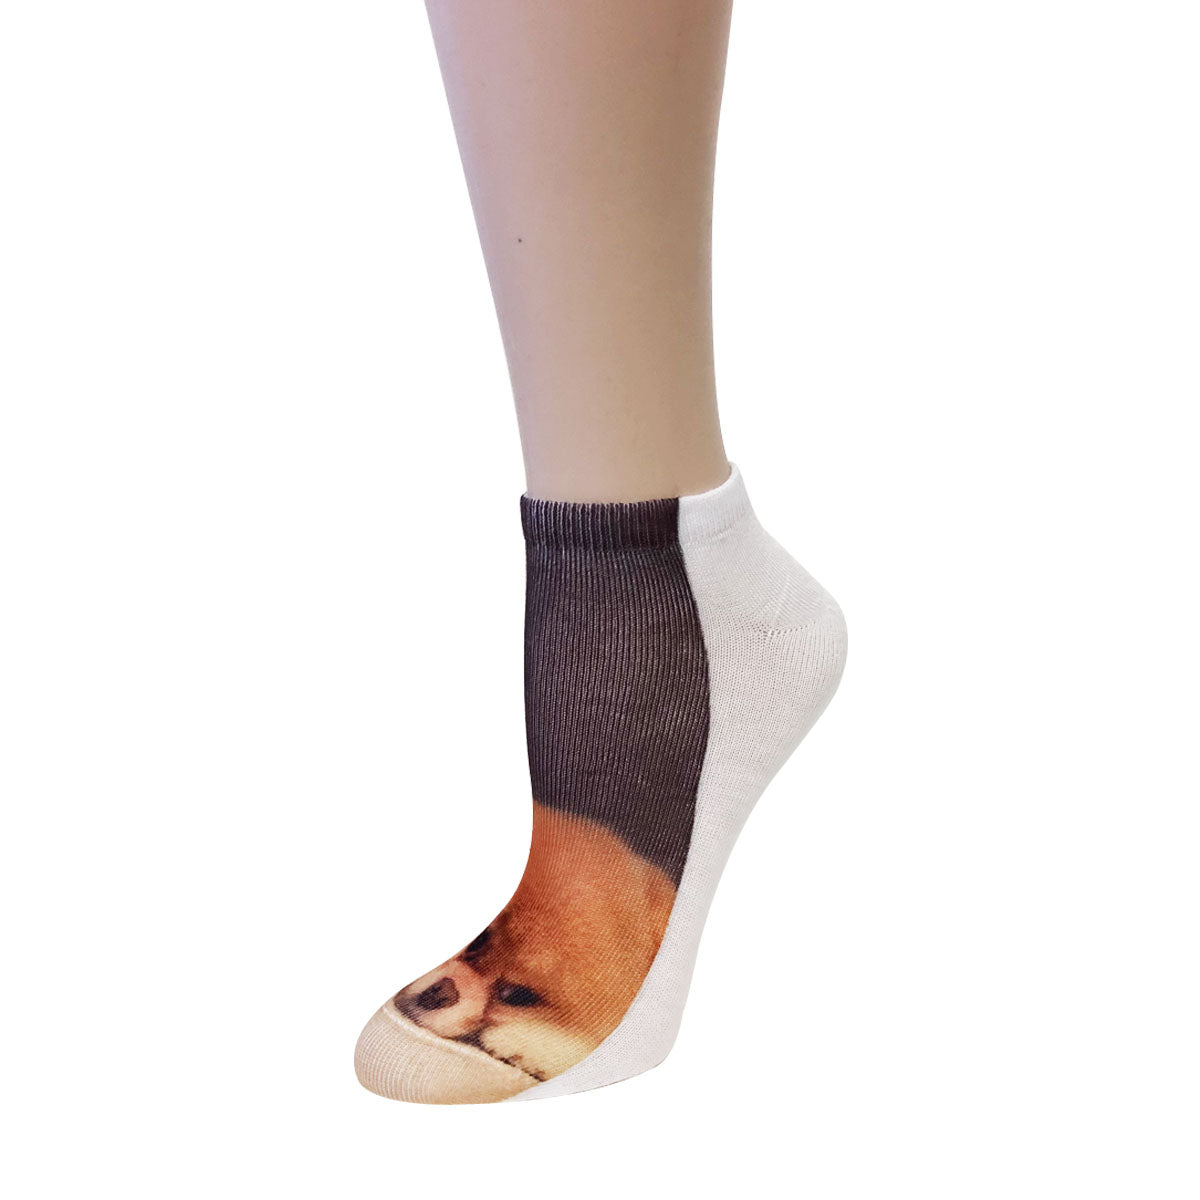 Wrapables 3D Novelty Funny Ankle Socks